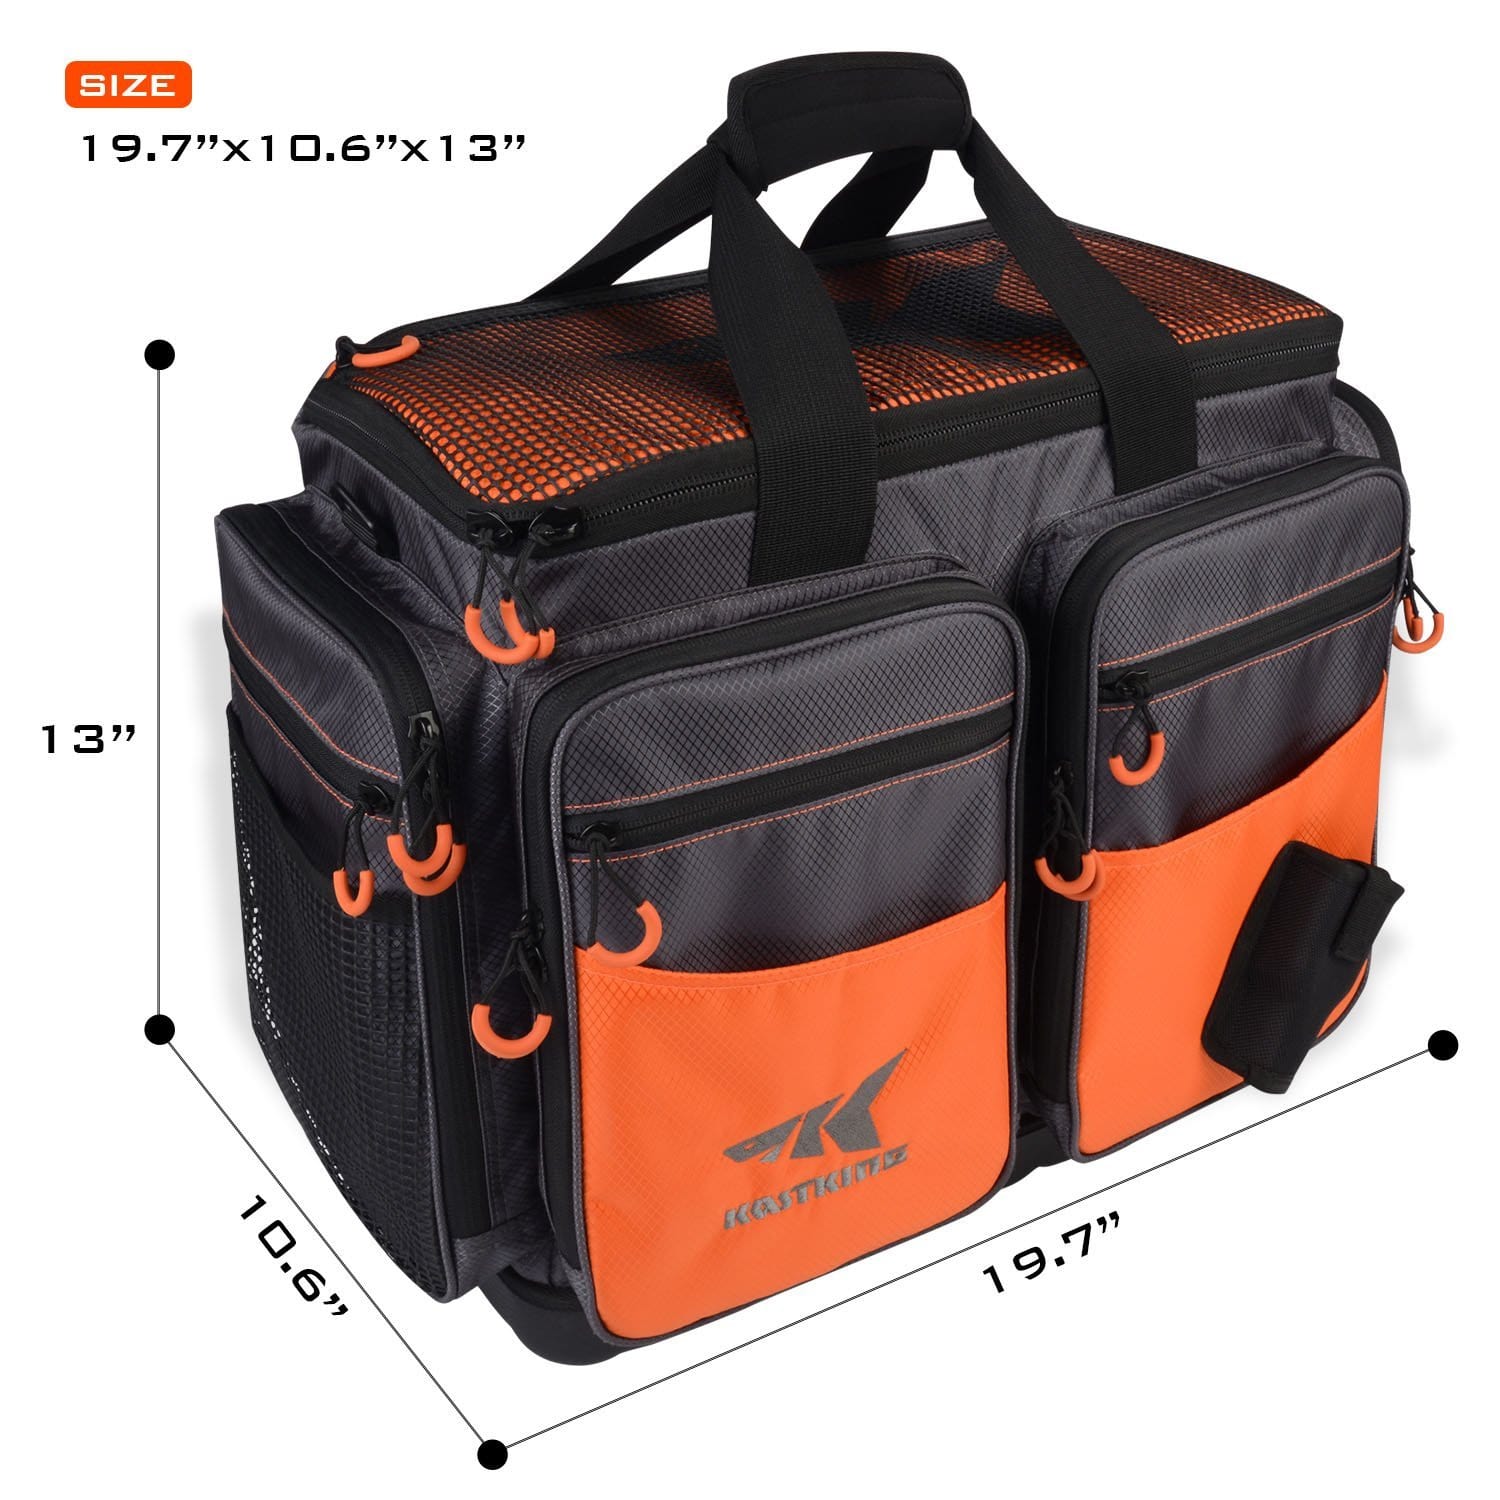 KastKing Fishing Tackle Bags - Lunker (19.7” x 13” x 10.6”) / Orange